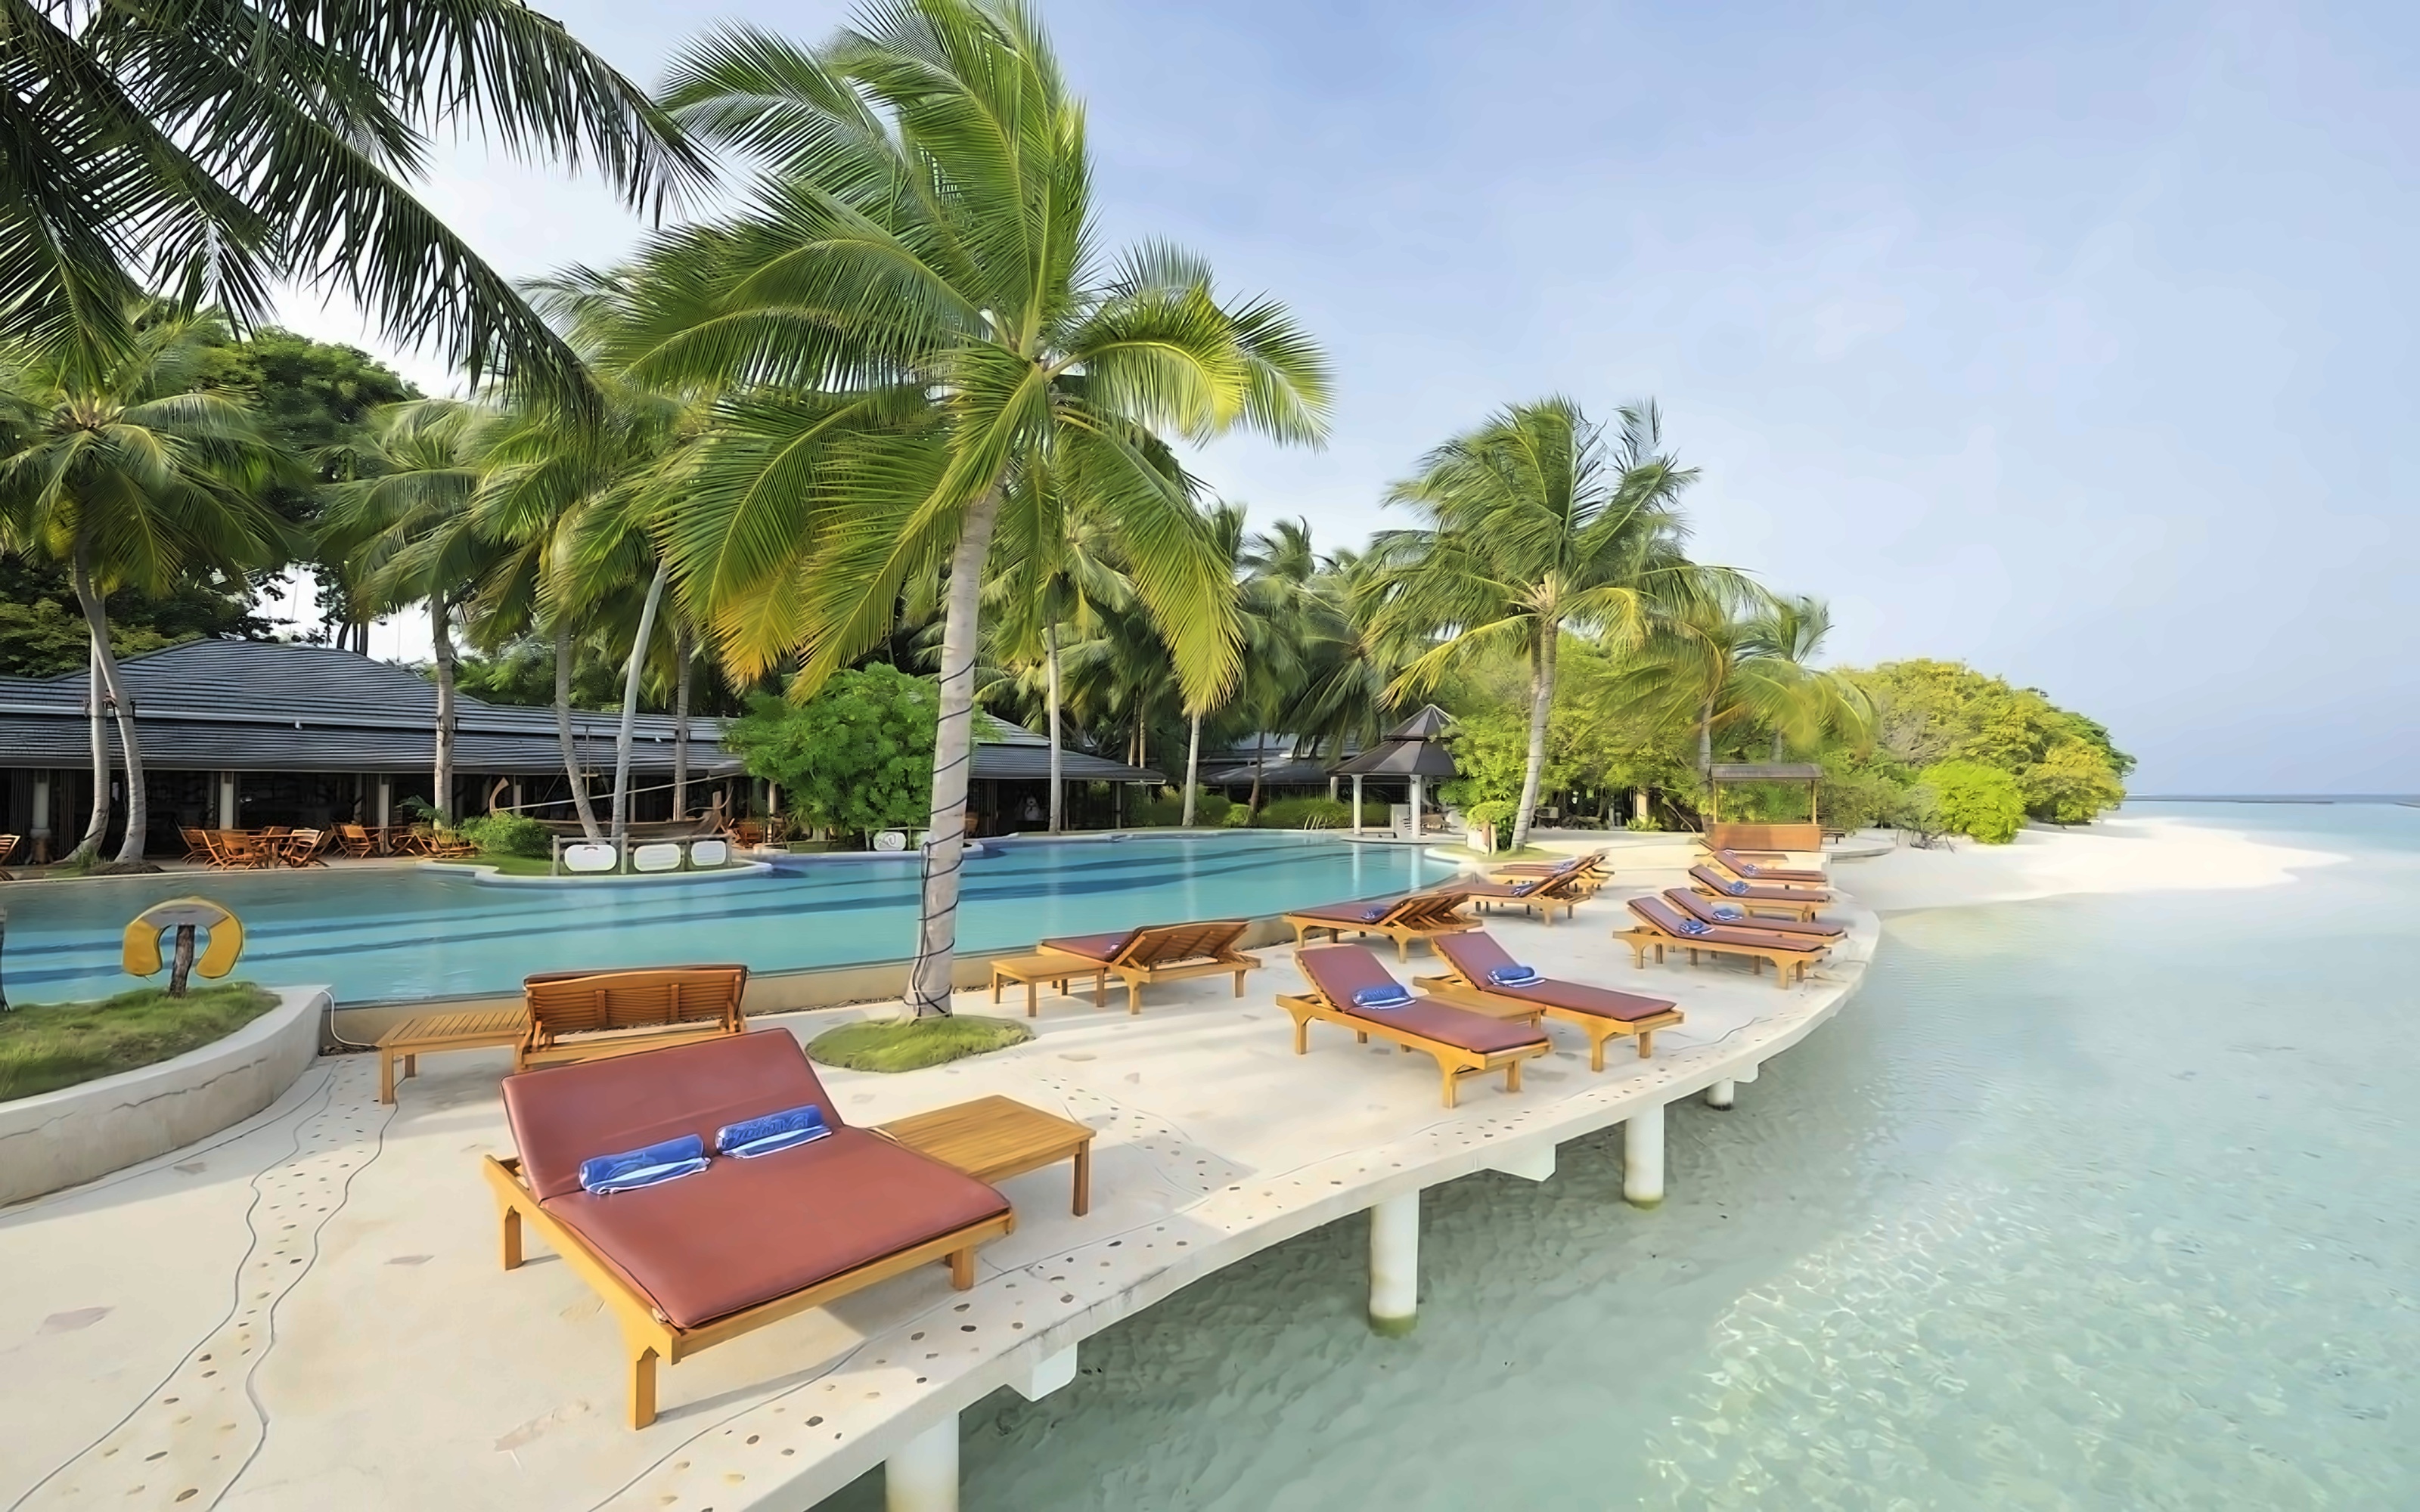 Island resort spa мальдивы. Royal Island Resort & Spa 5*. Отель Роял Айленд Мальдивы. Royal Island Resort & Spa 5* (Баа Атолл). Royal Island Maldives 5.